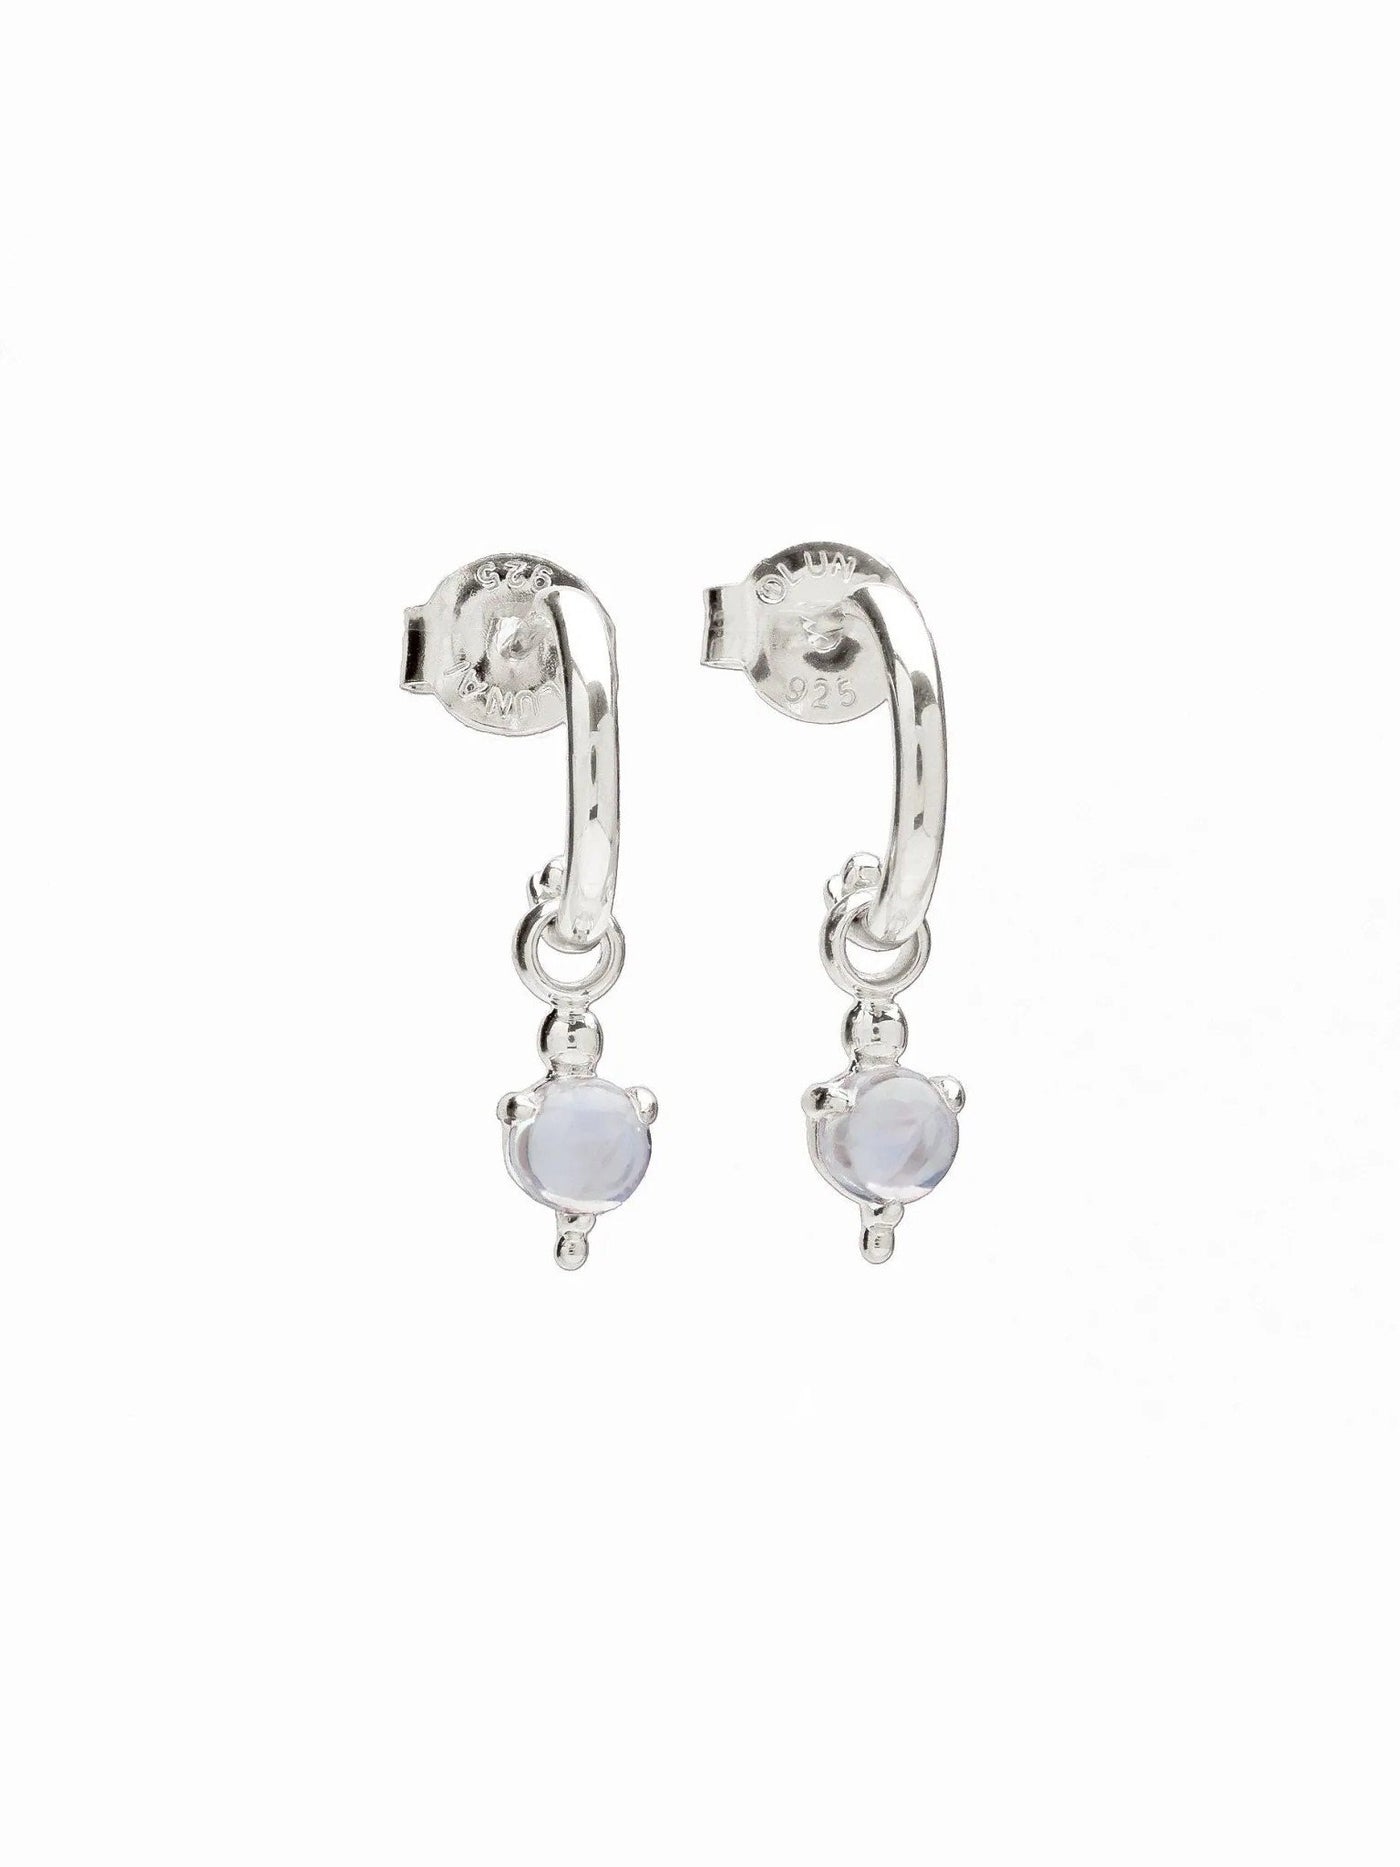 Claire Hoop Earrings - 925 Sterling SilverBackUpItemsBirthstone HoopsLunai Jewelry